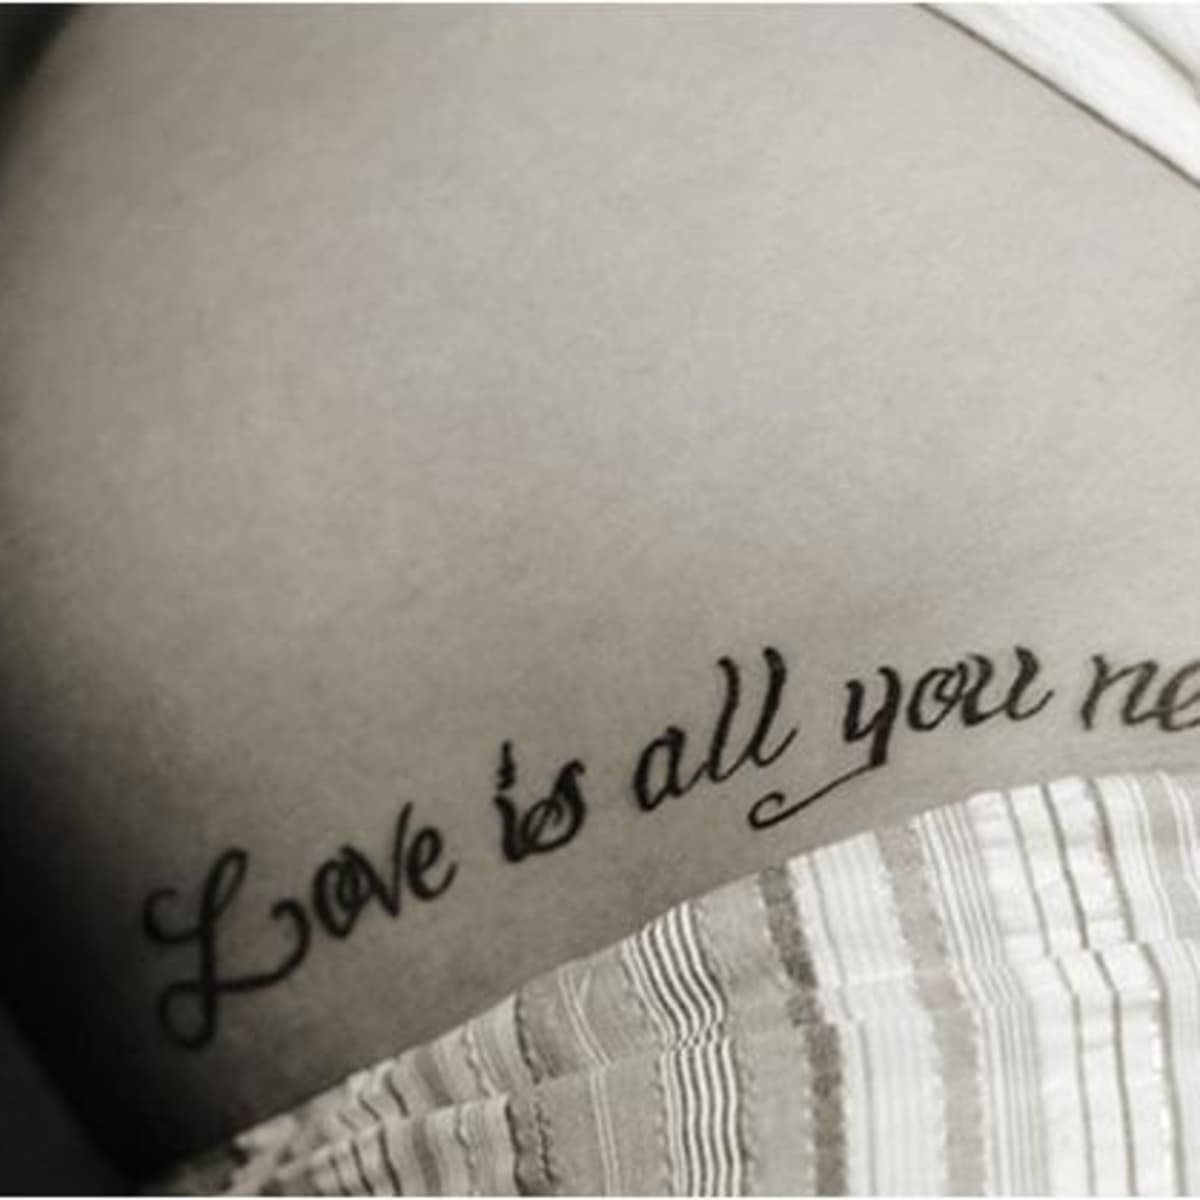 Awesome Tattoo Ideas on Tumblr: Lovers Tattoo